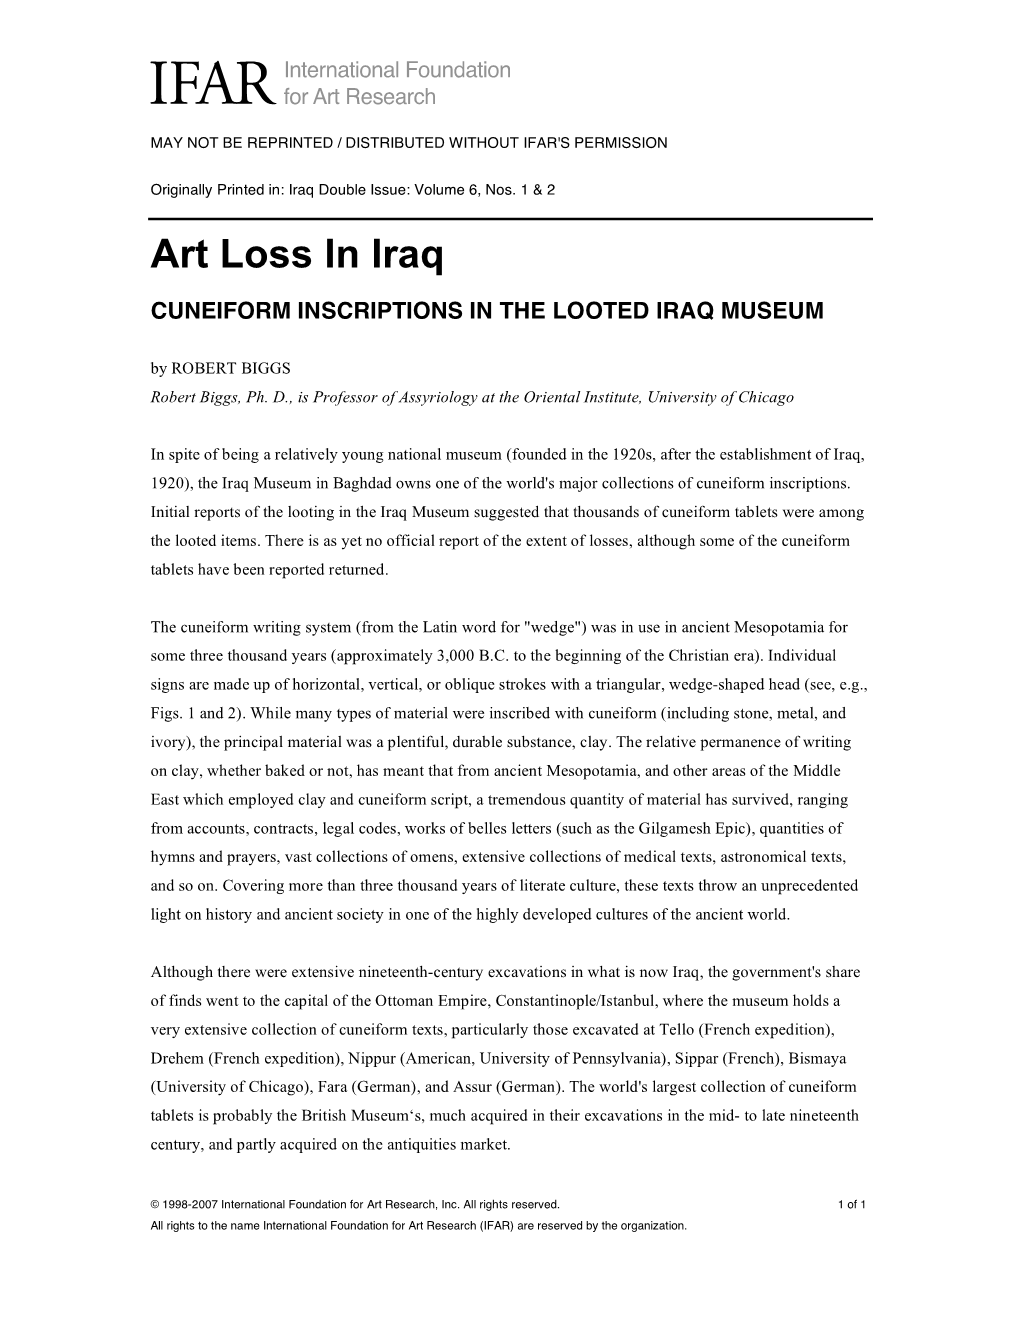 CUNEIFORM INSCRIPTIONS in the LOOTED IRAQ MUSEUM by ROBERT BIGGS Robert Biggs, Ph